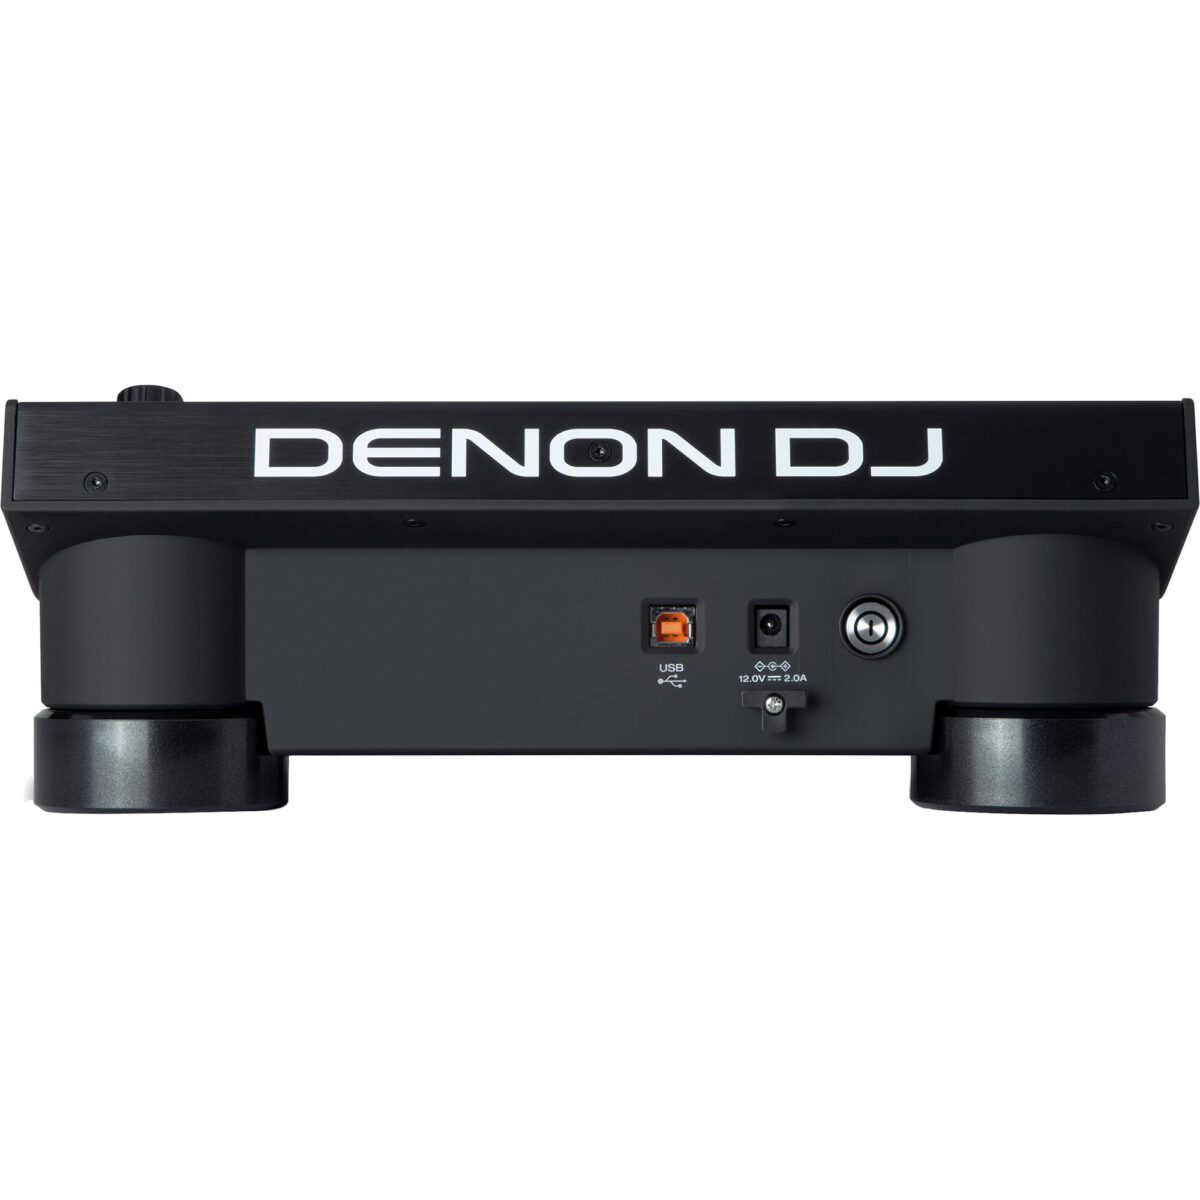 Denon DJ LC6000 PRIME Performance Expansion Controller